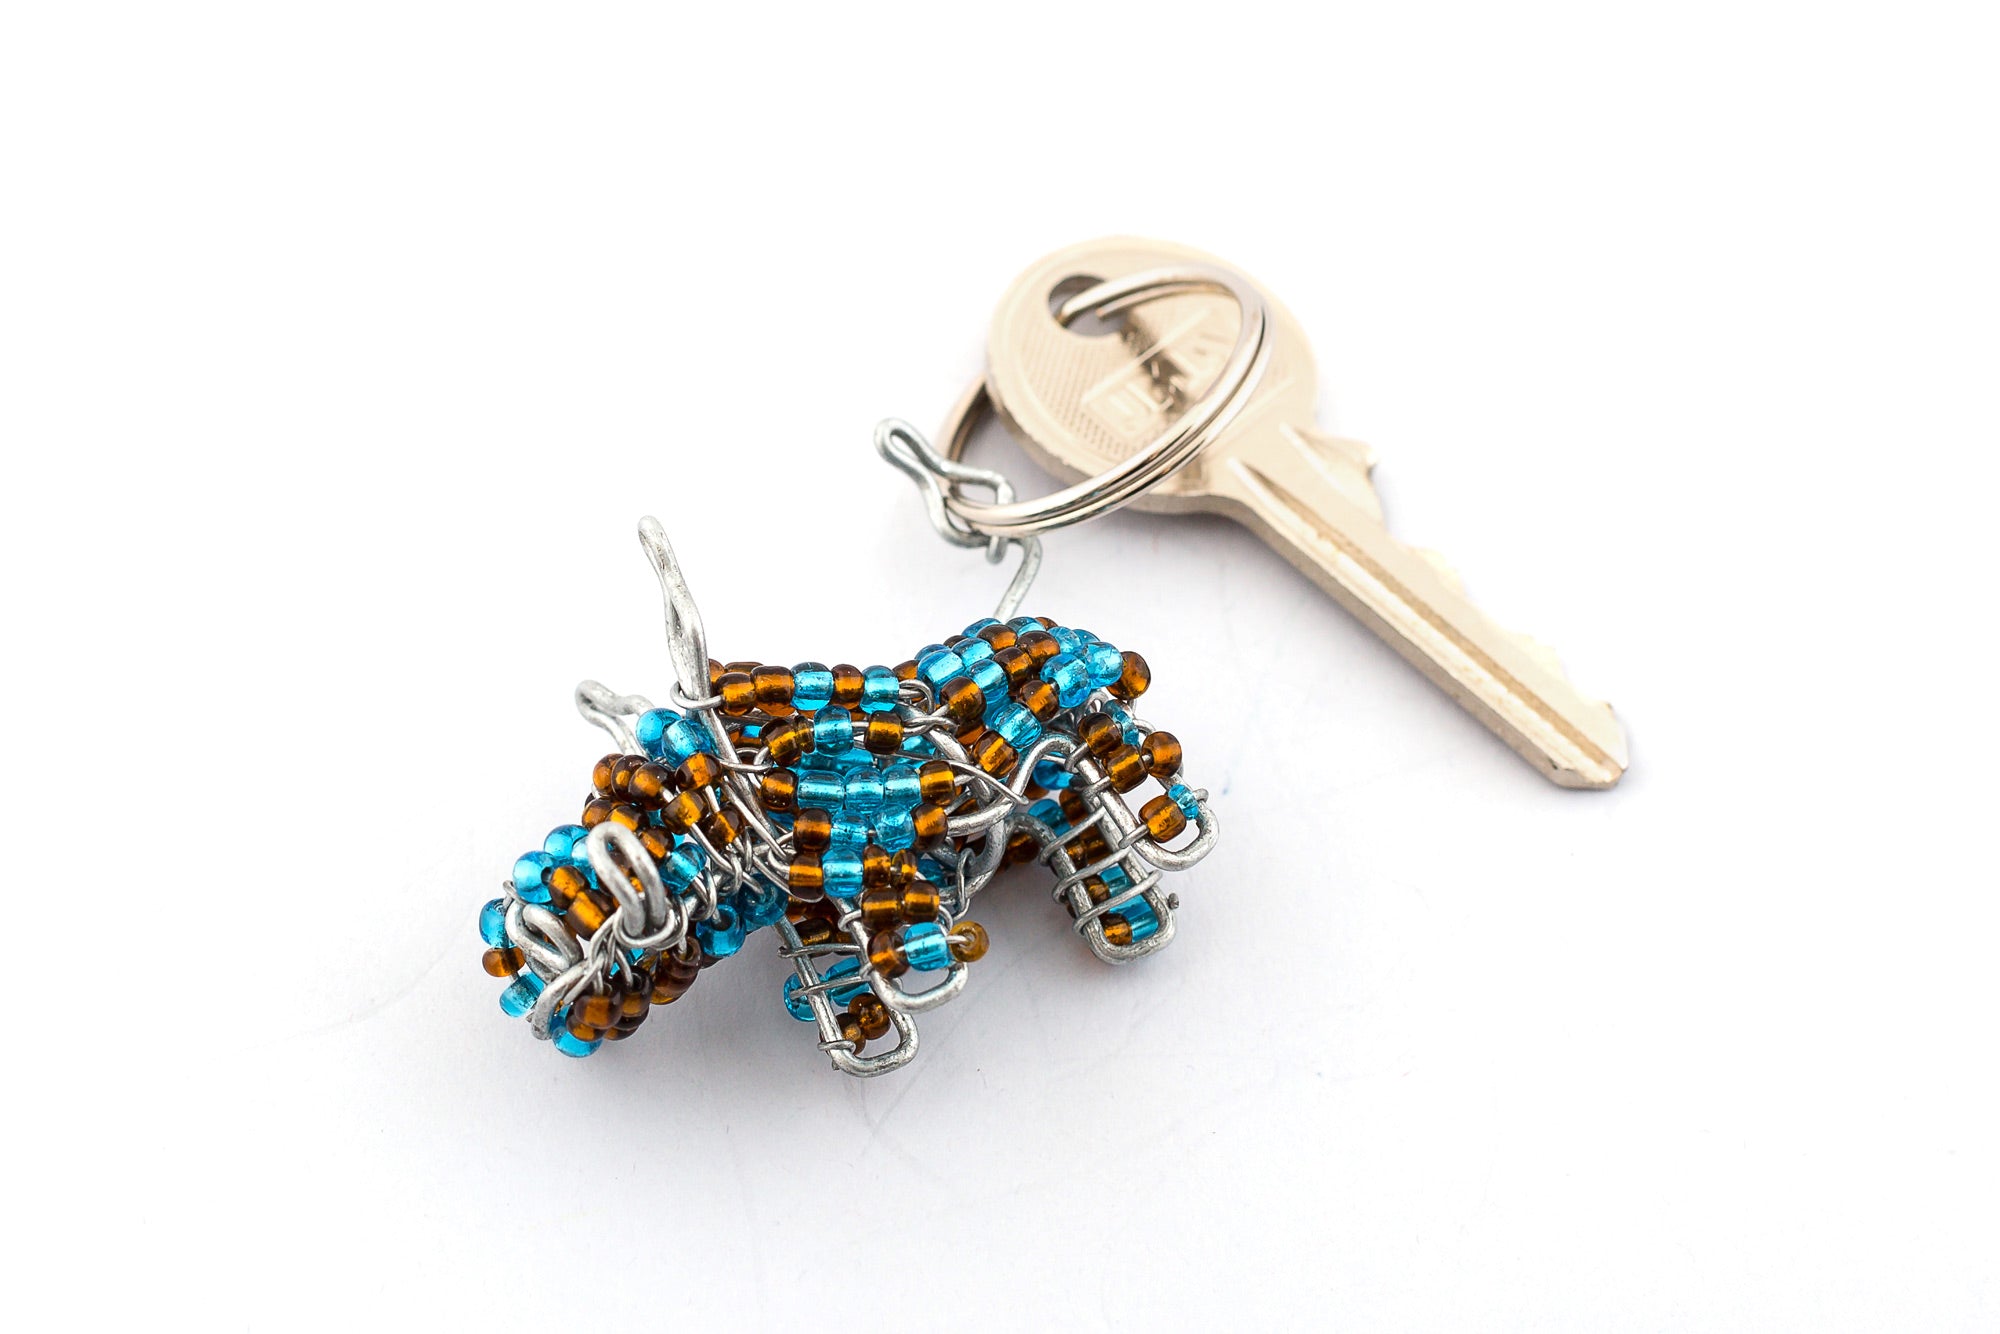 Beaded key ring bracelets - Fun craft ideas for kids -